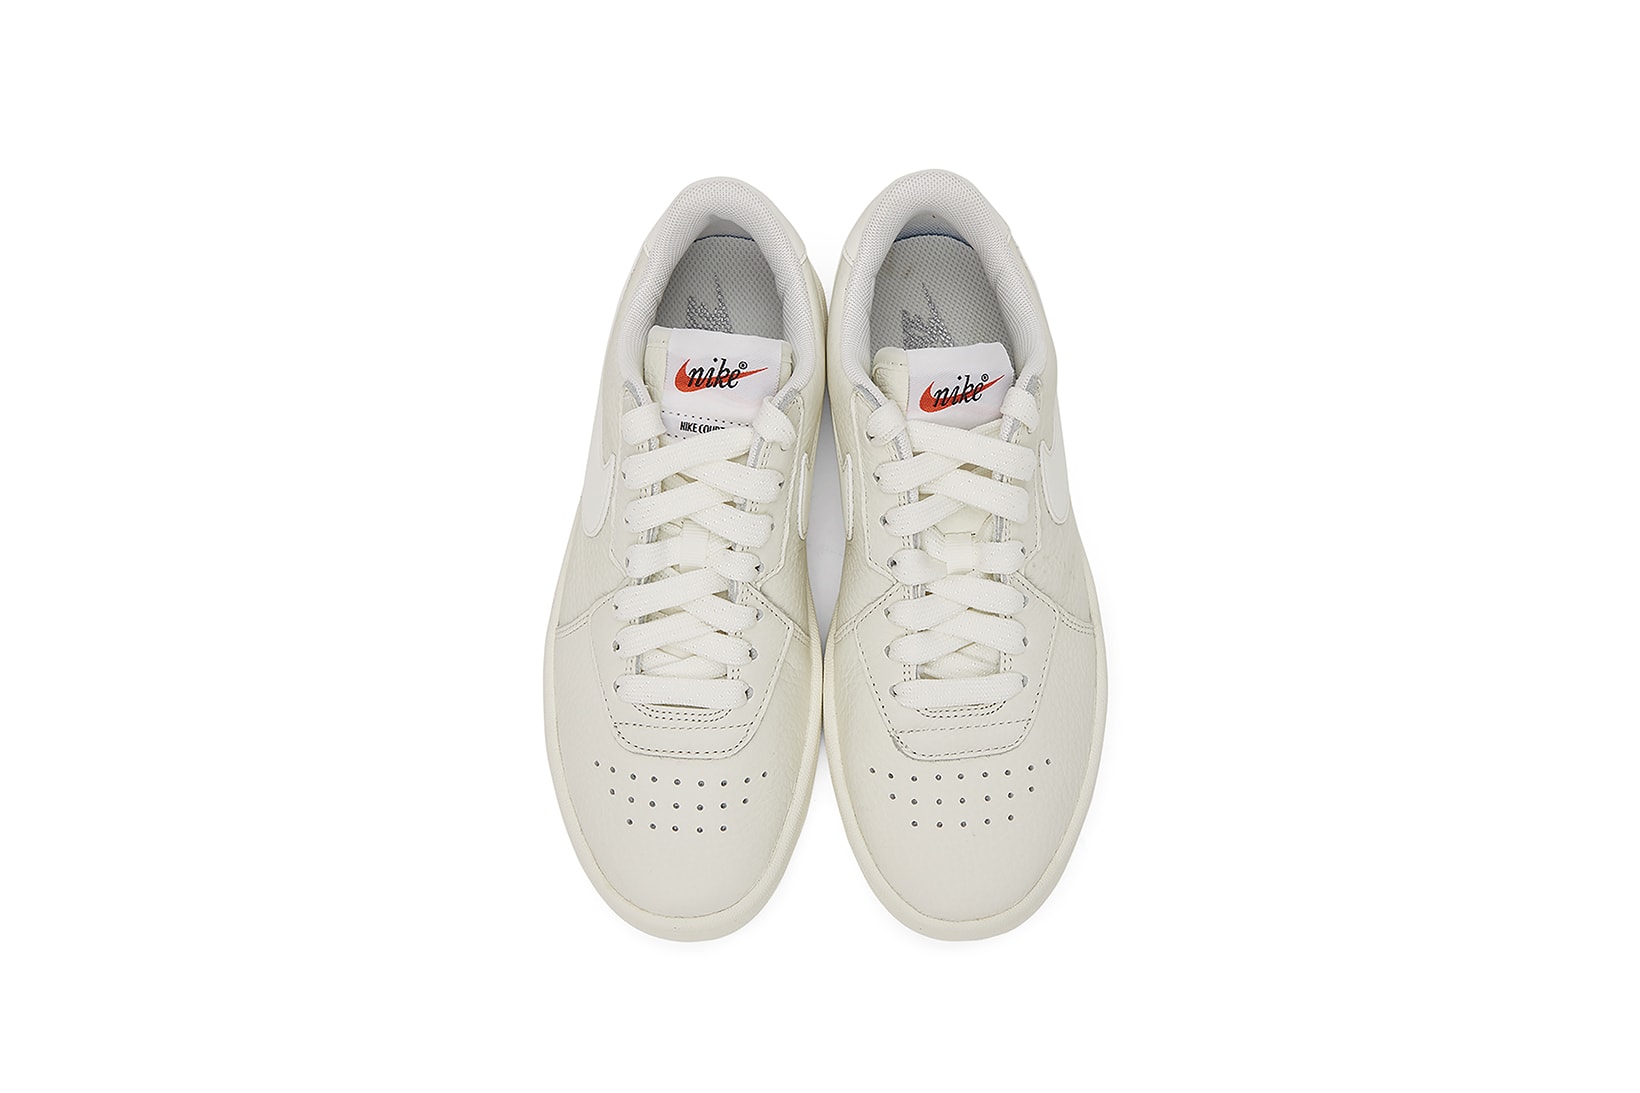 ssense nike leather court blanc minimalist white sneaker exclusive womens where to shop